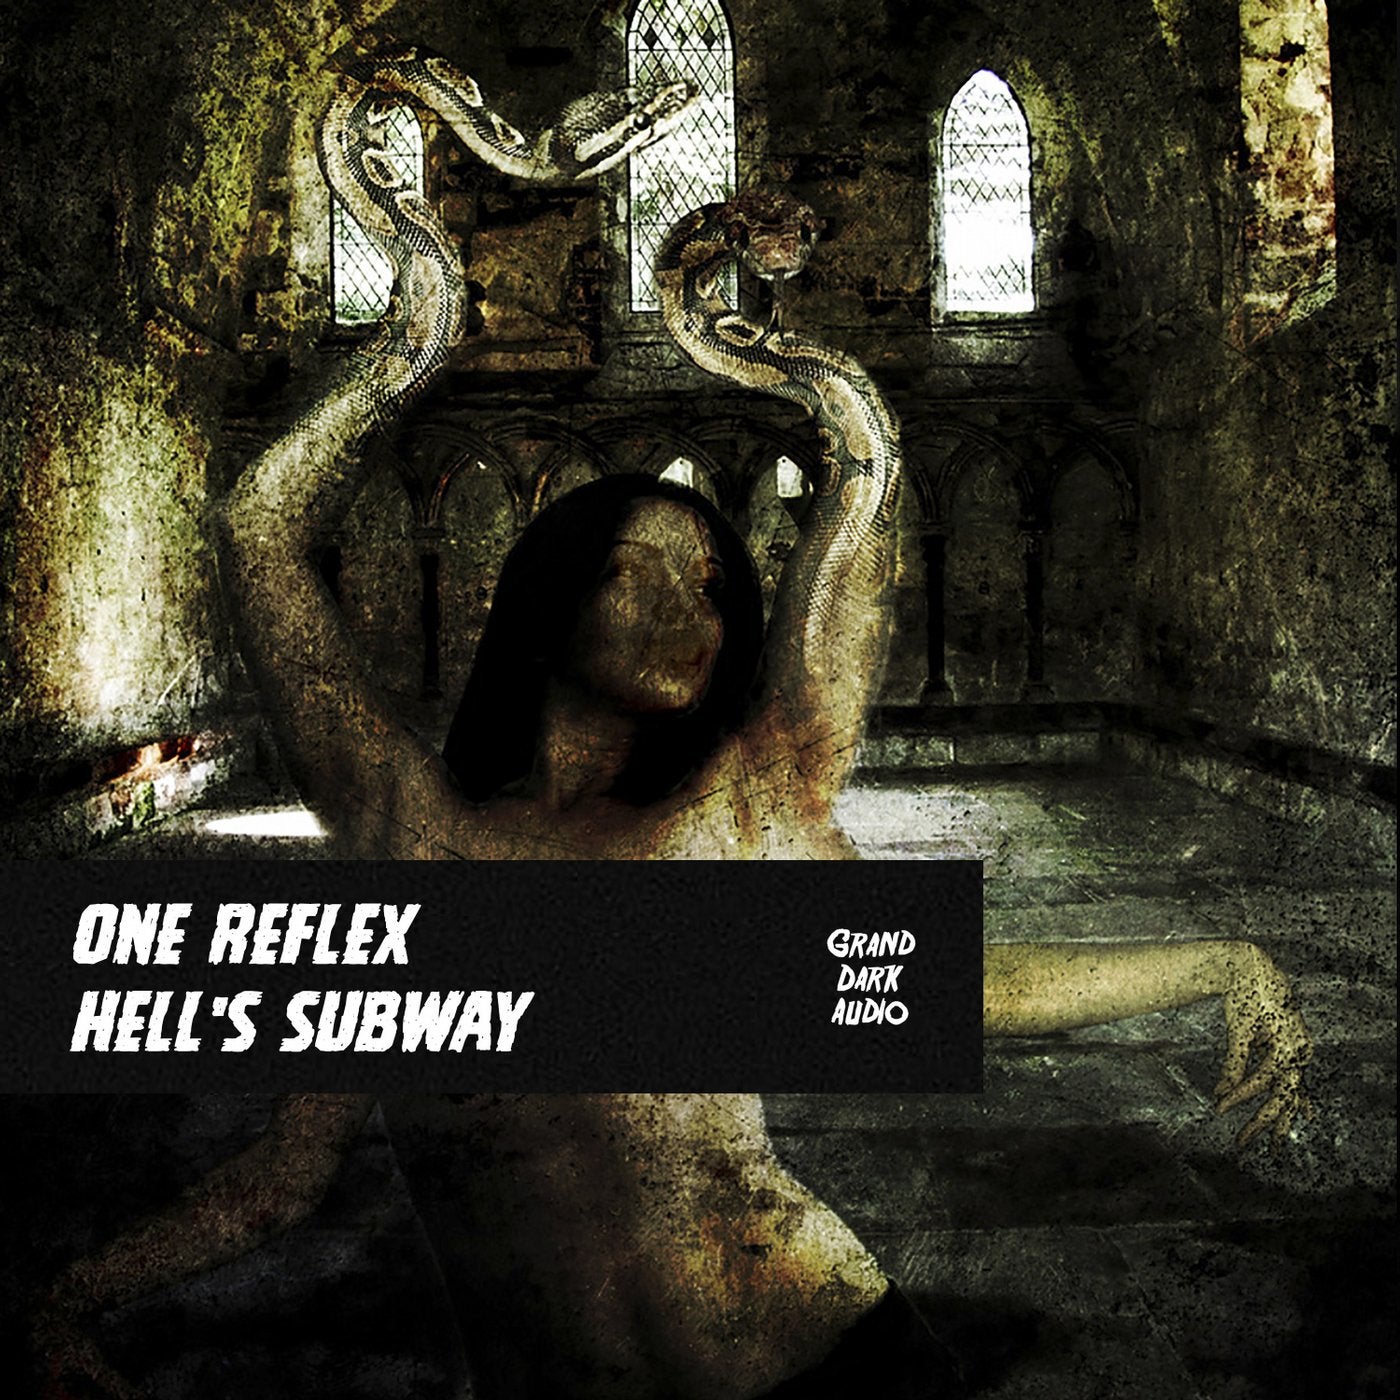 Hell's Subway